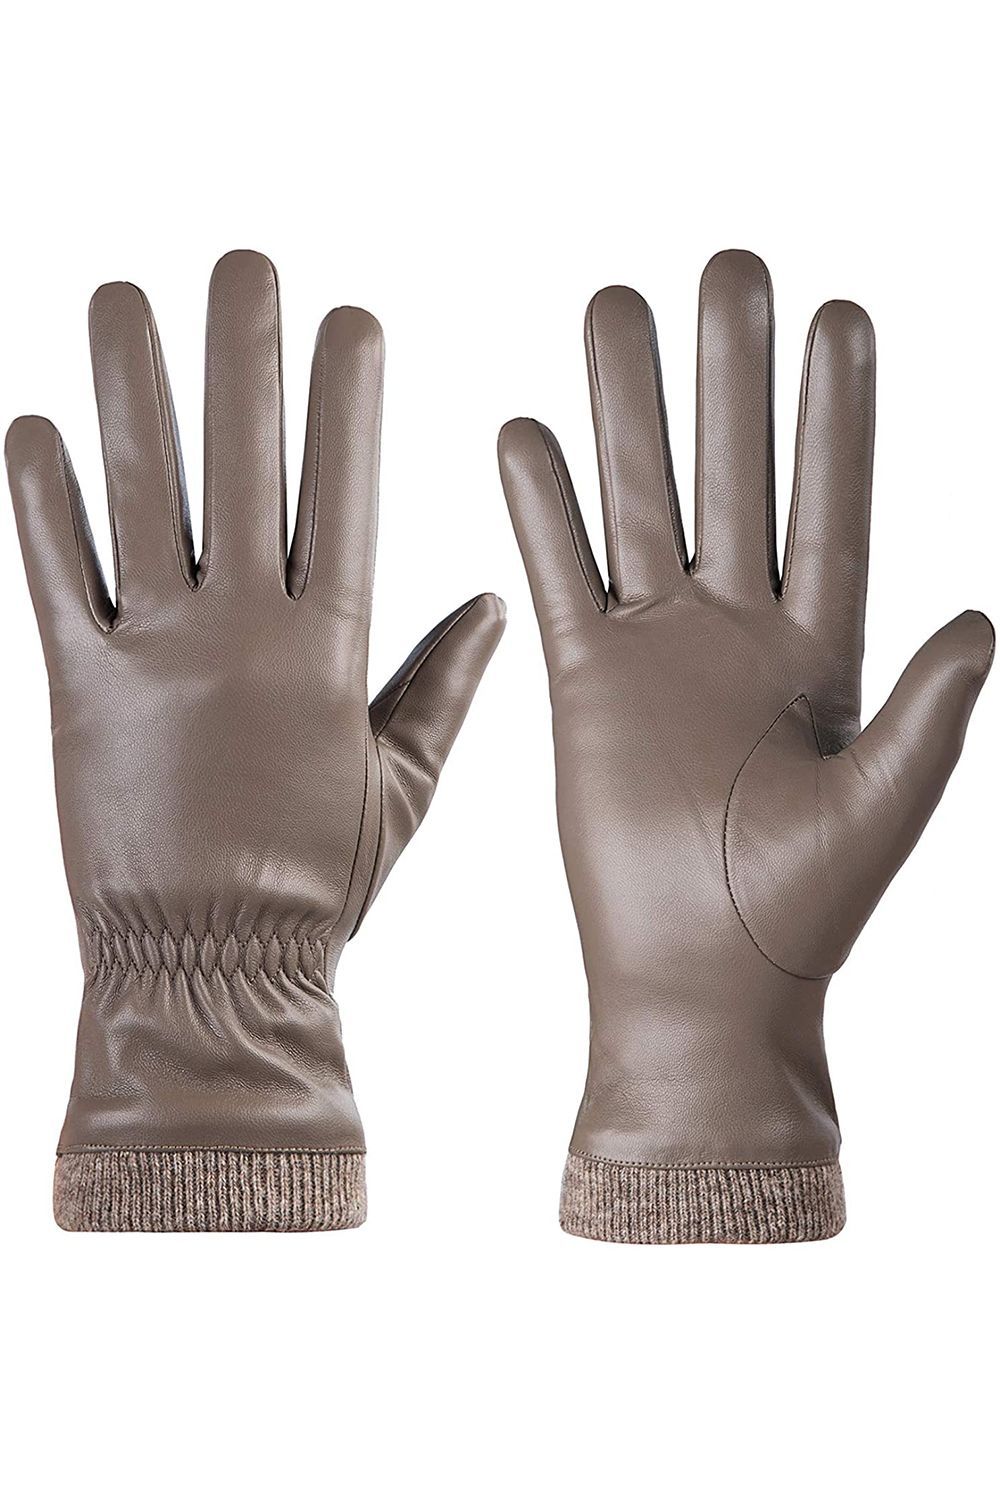 Winter Ladies' Dress Gloves #18N Leather Gloves Hand Warmer XL Woman's Gloves 